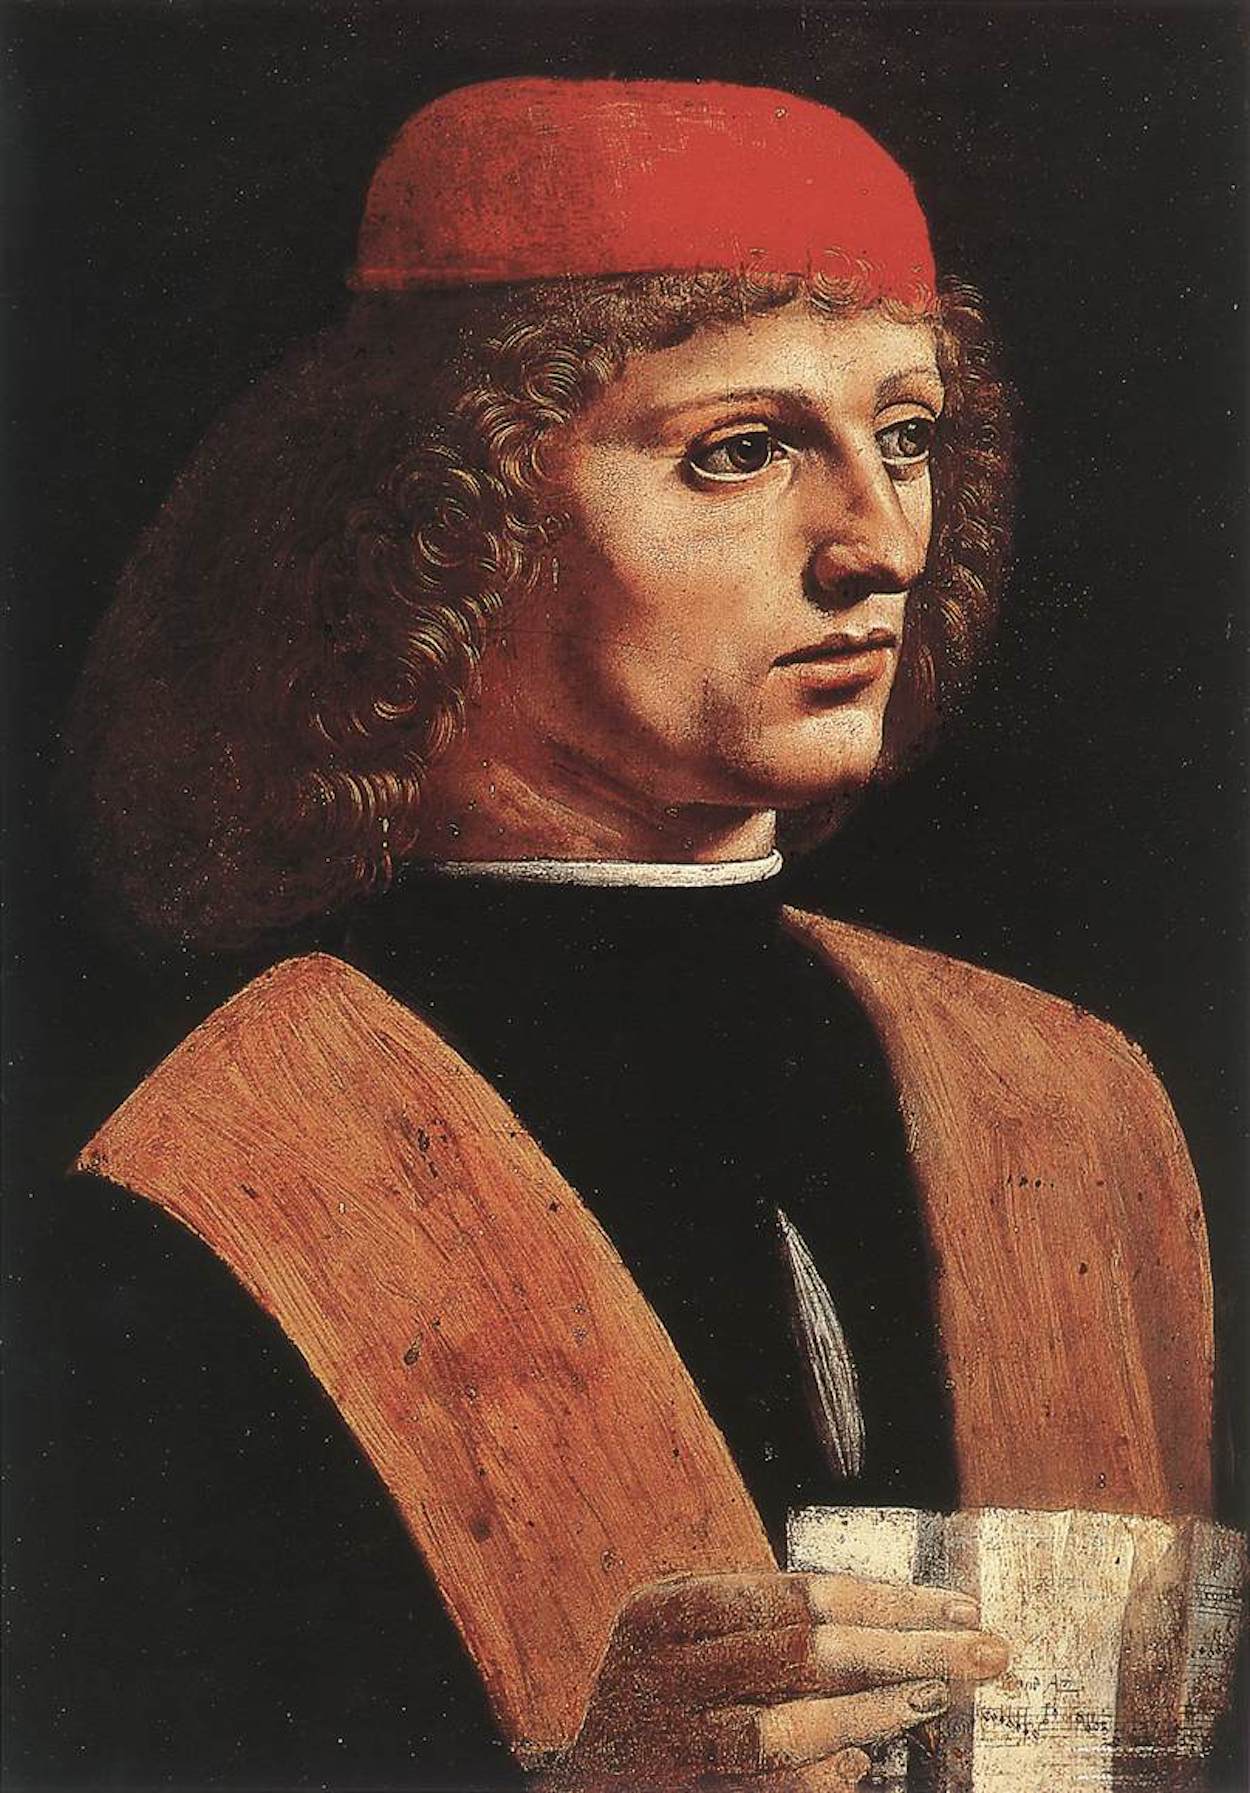 The Musician by Leonardo da Vinci - c. 1486 - 44.7 x 32 cm Pinacoteca Ambrosiana